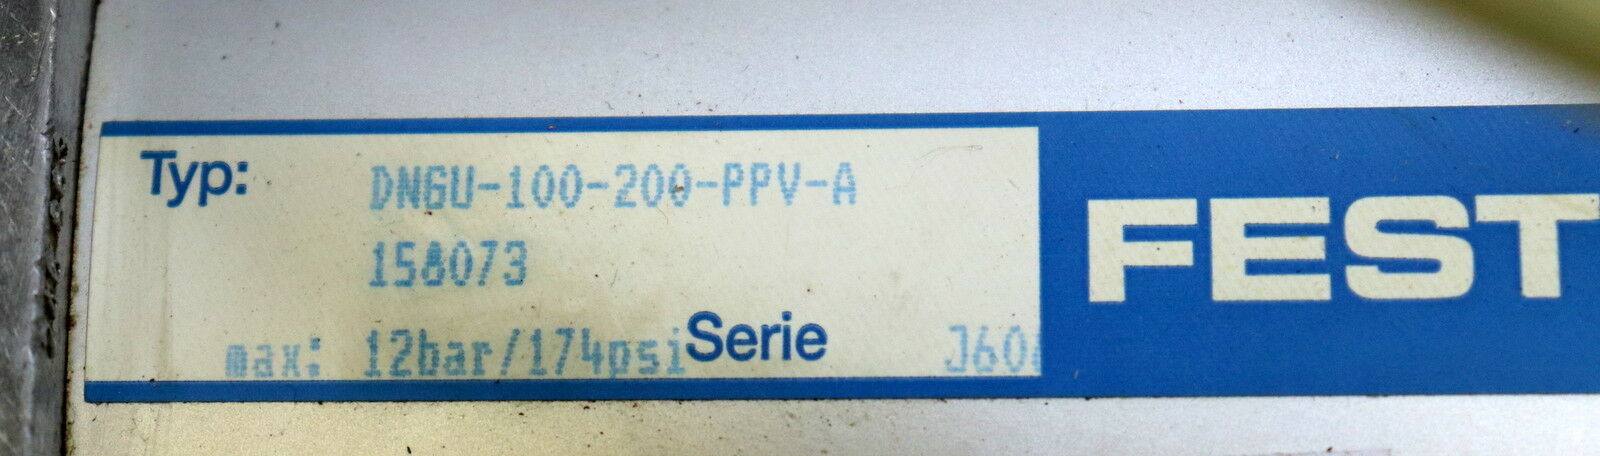 FESTO doppelwirkende Pneumatik-Zylinder DNGU-100-200-PPV-A - Nr.158073 - 12bar